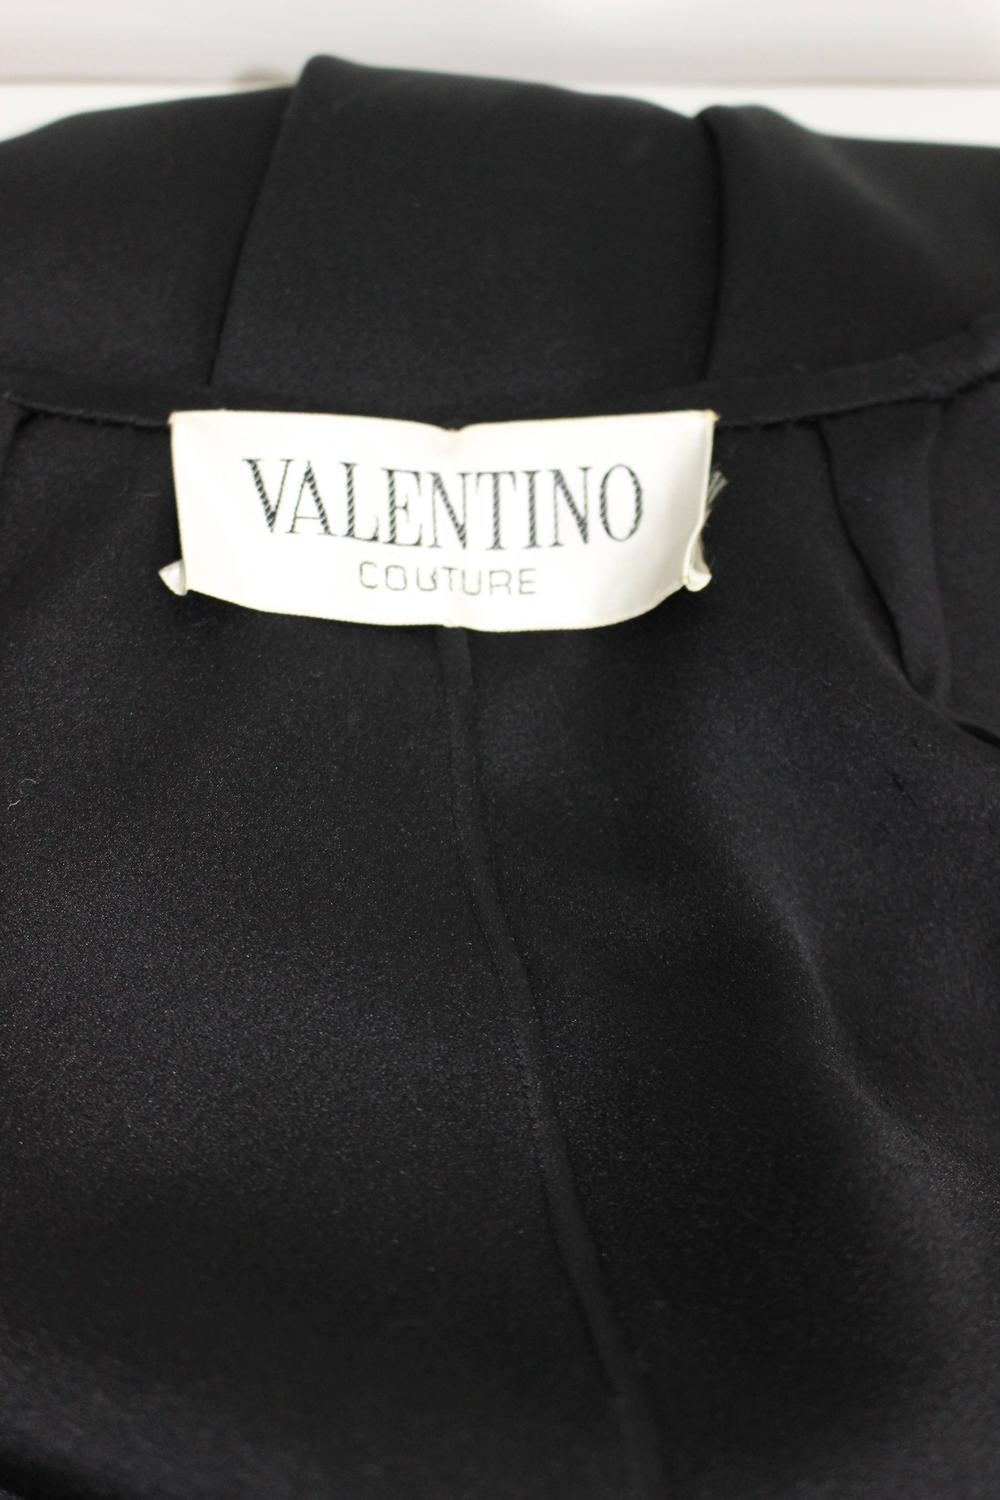 Valentino Haute Couture Vintage Black Silk Satin Cape For Sale at 1stdibs